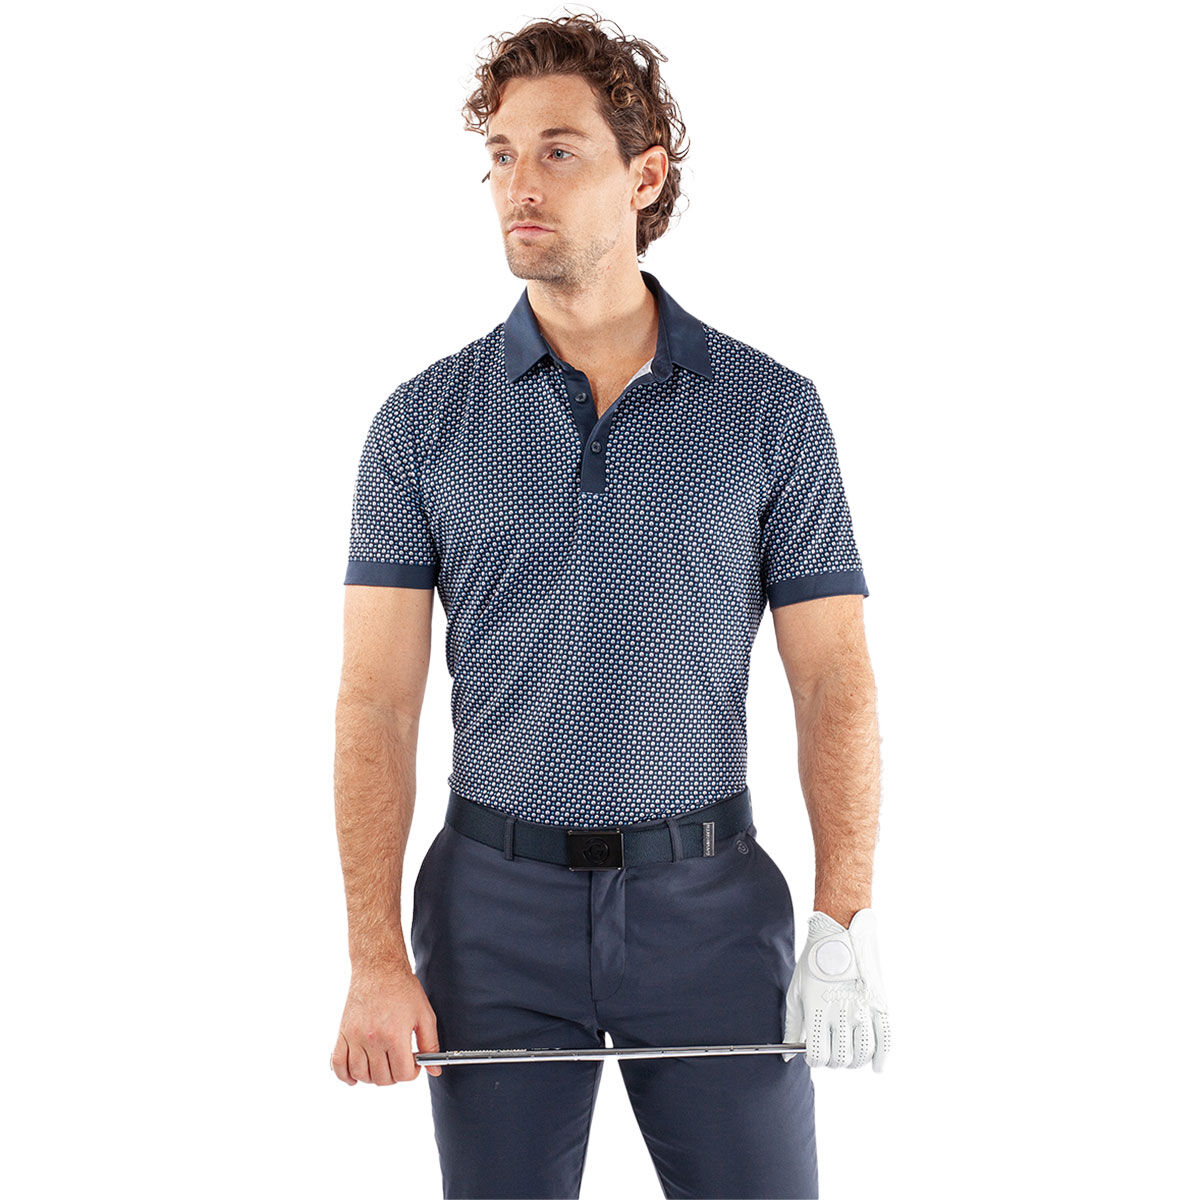 Galvin Green Men’s Mate Golf Polo Shirt, Mens, Cool grey/navy, Small | American Golf